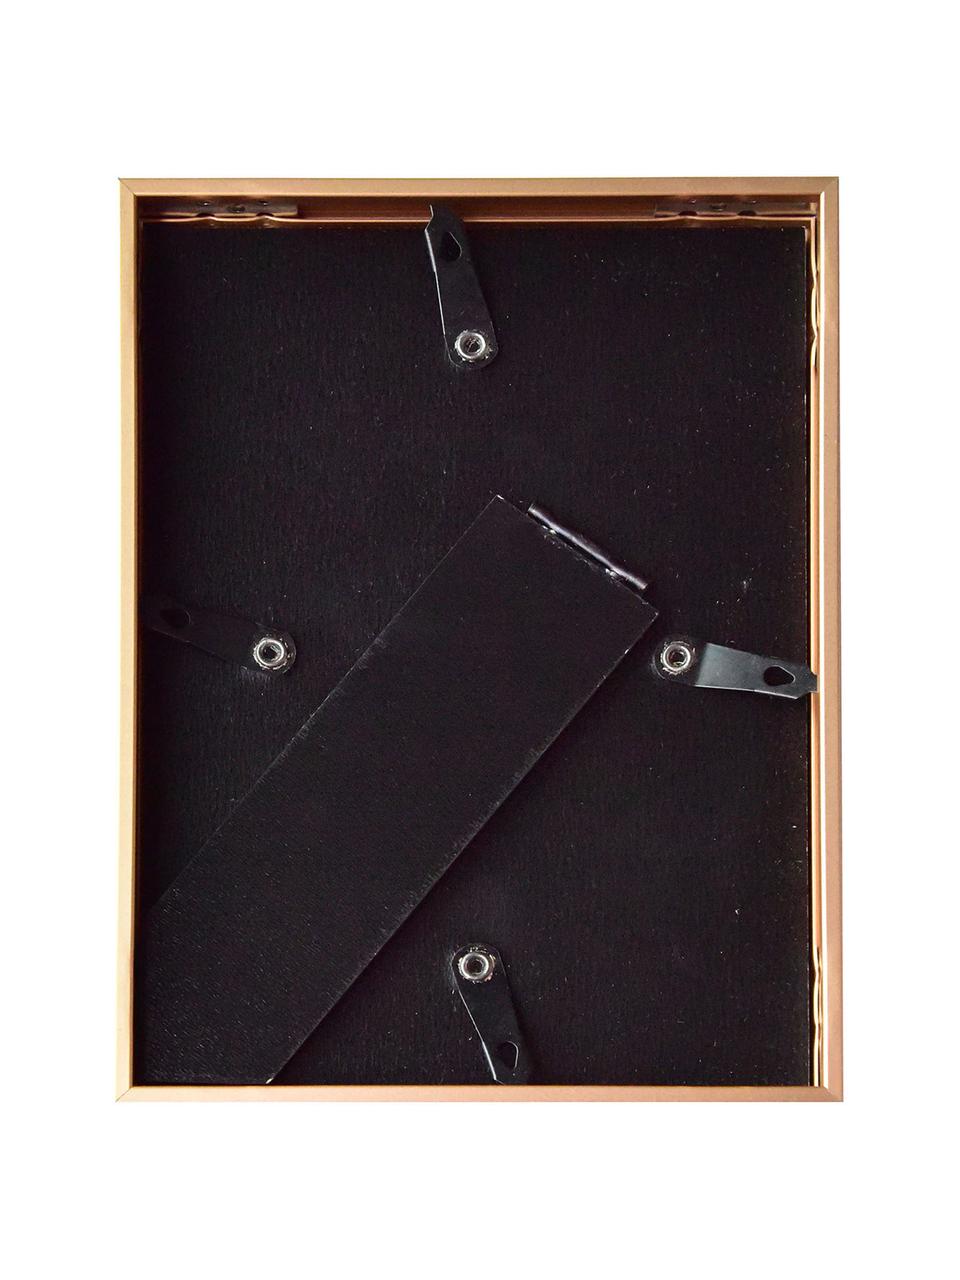 Marco Accent, Parte trasera: tablero de fibras de dens, Negro, 10 x 15 cm